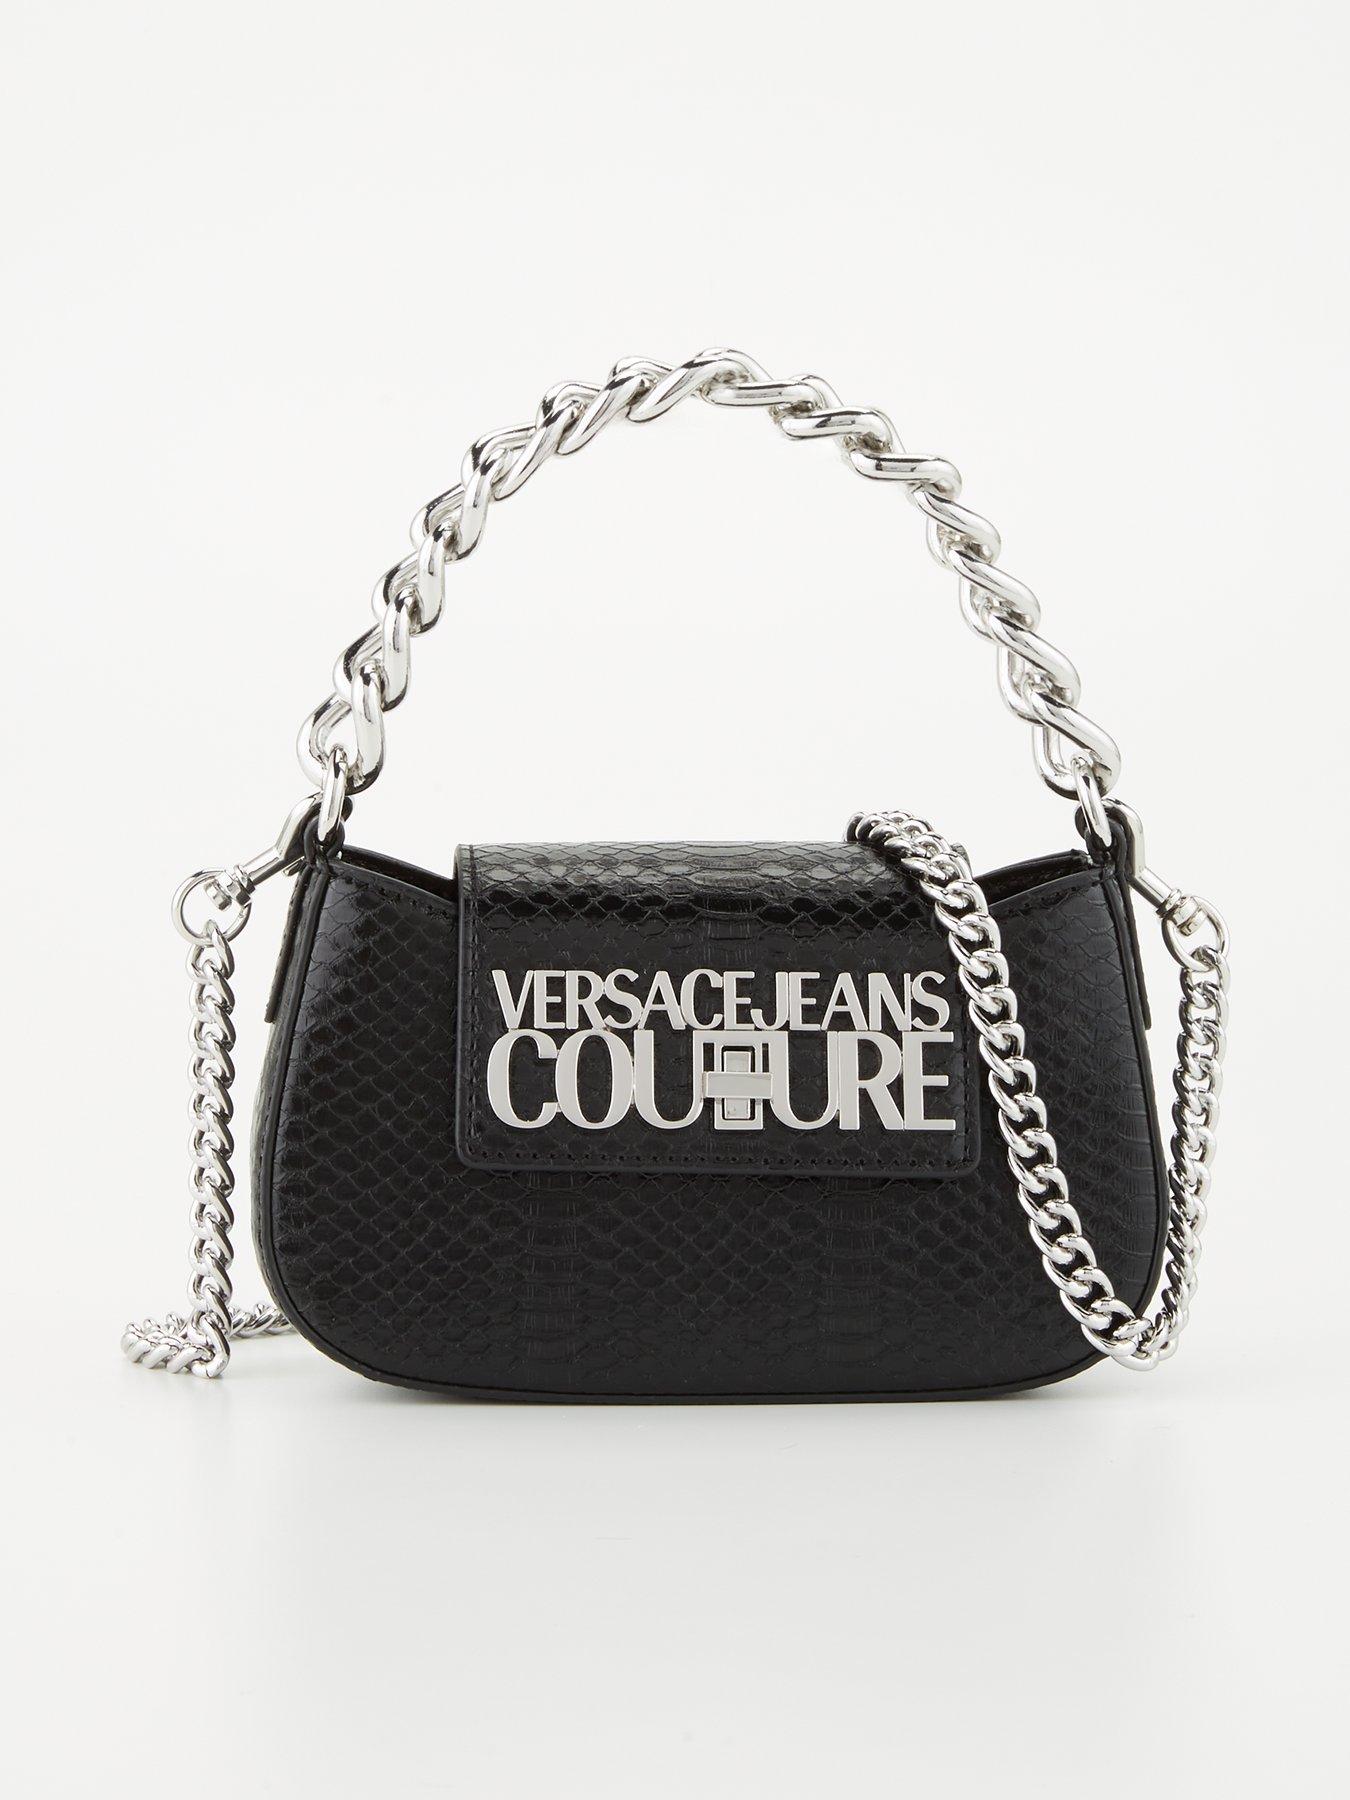 Versace Jeans Couture Logo Lock Black, Crossbody Bag